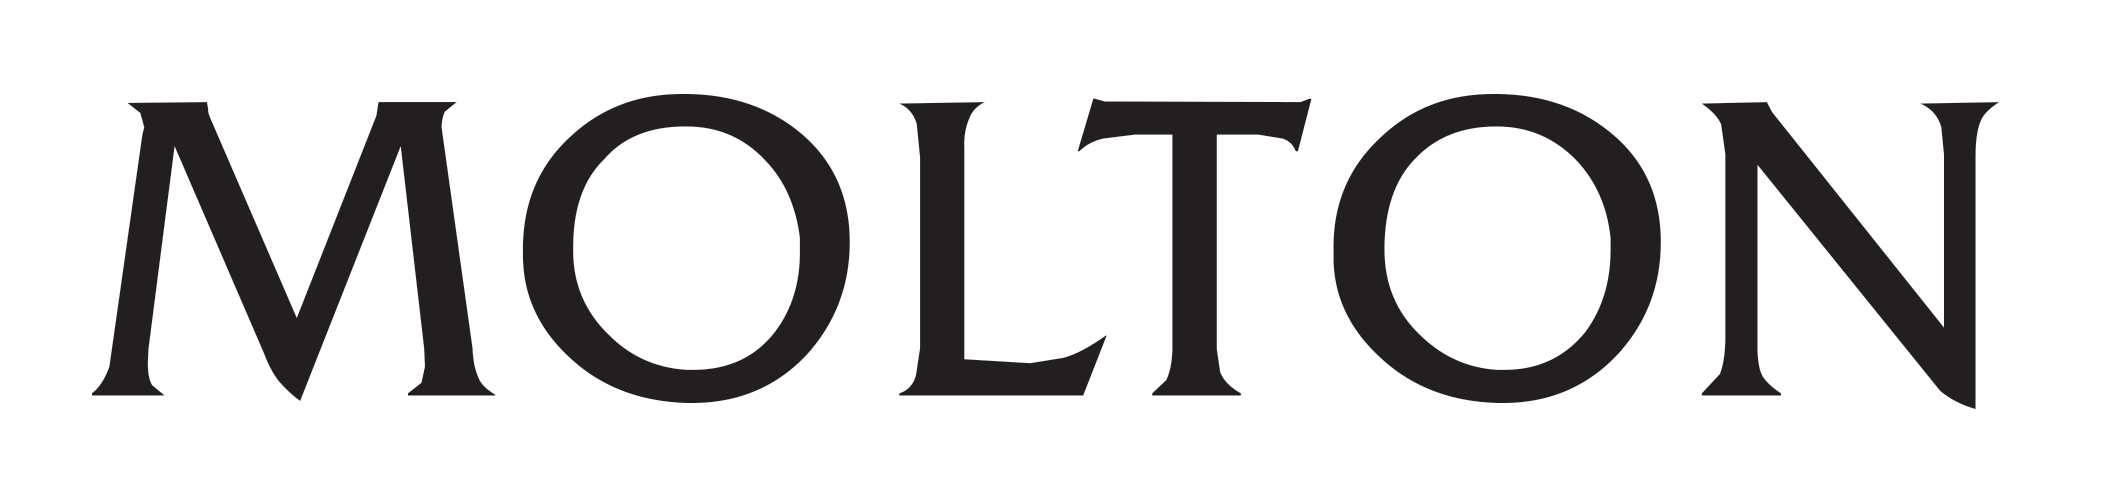 Molton_logo.jpg